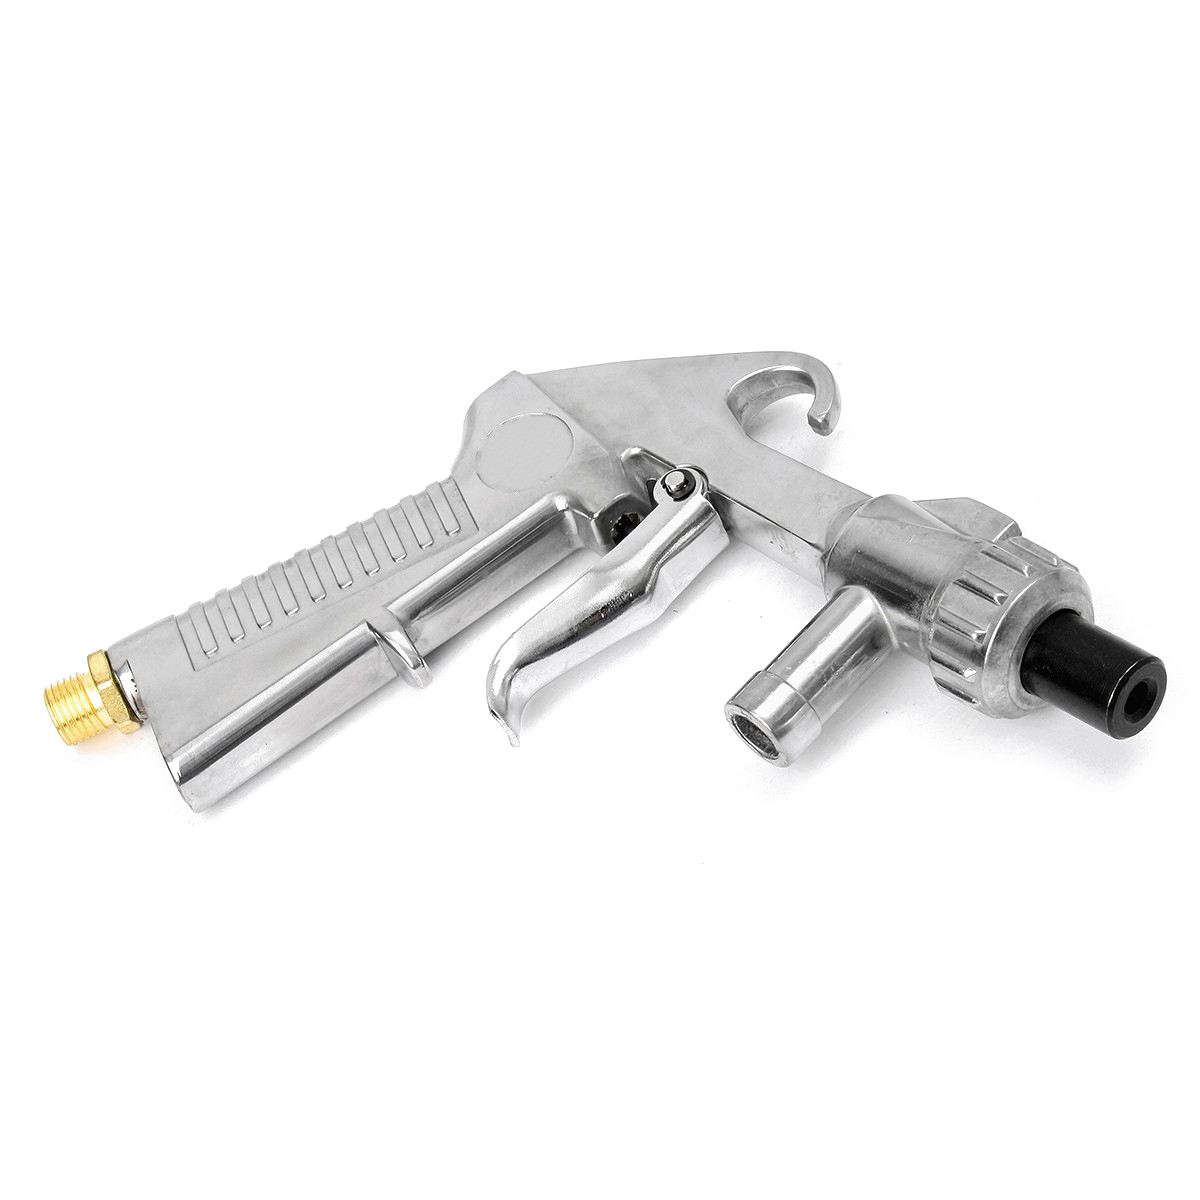 High quality Air Sand Blasting Gun kit Sandblaster kit Sandblasting Blast Gun+3 Nozzles+Connector+Tube Derusting Tool Kit